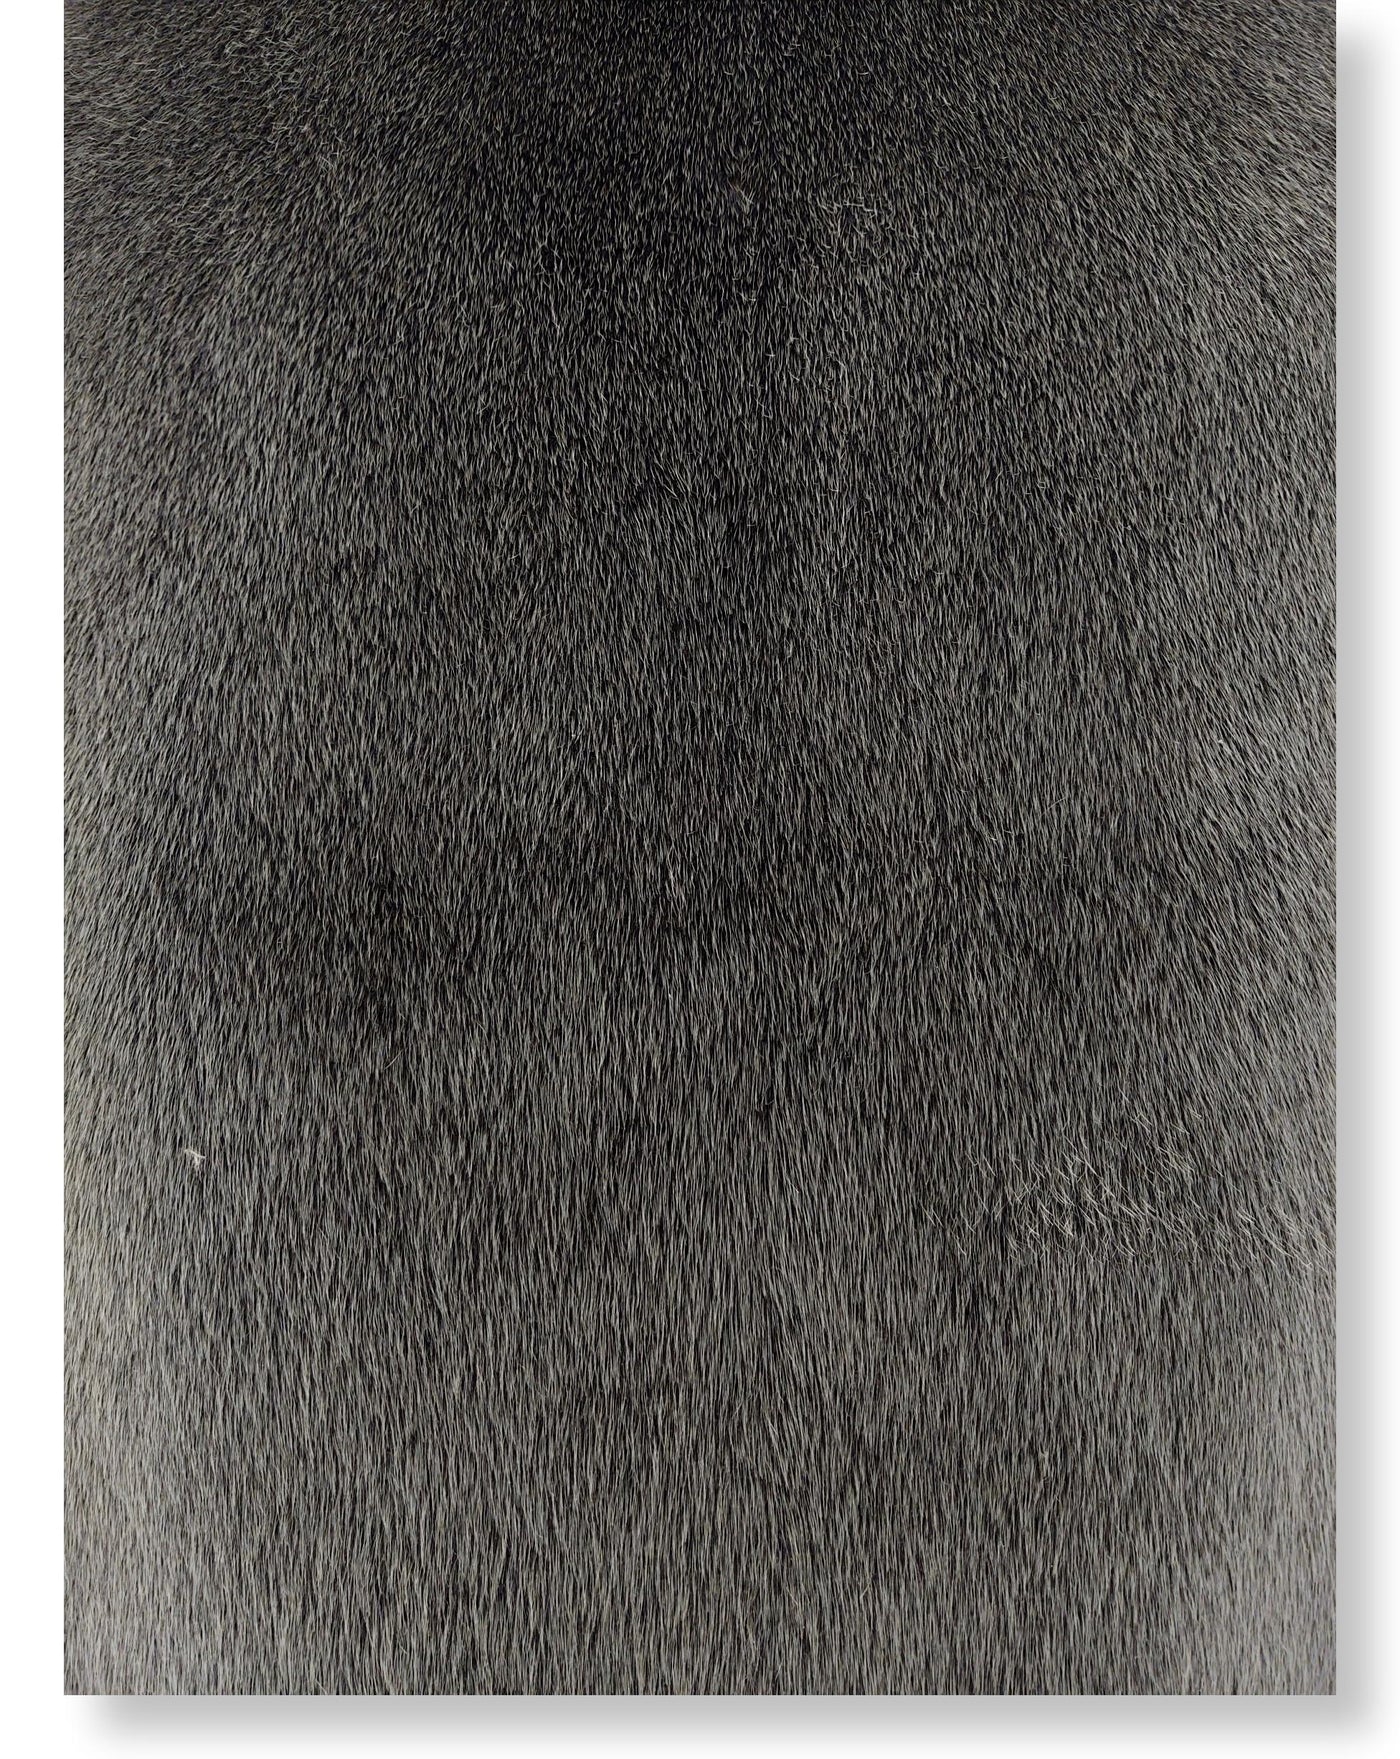 Seal Blueback Grey - Dressed Fur Skin - Fur